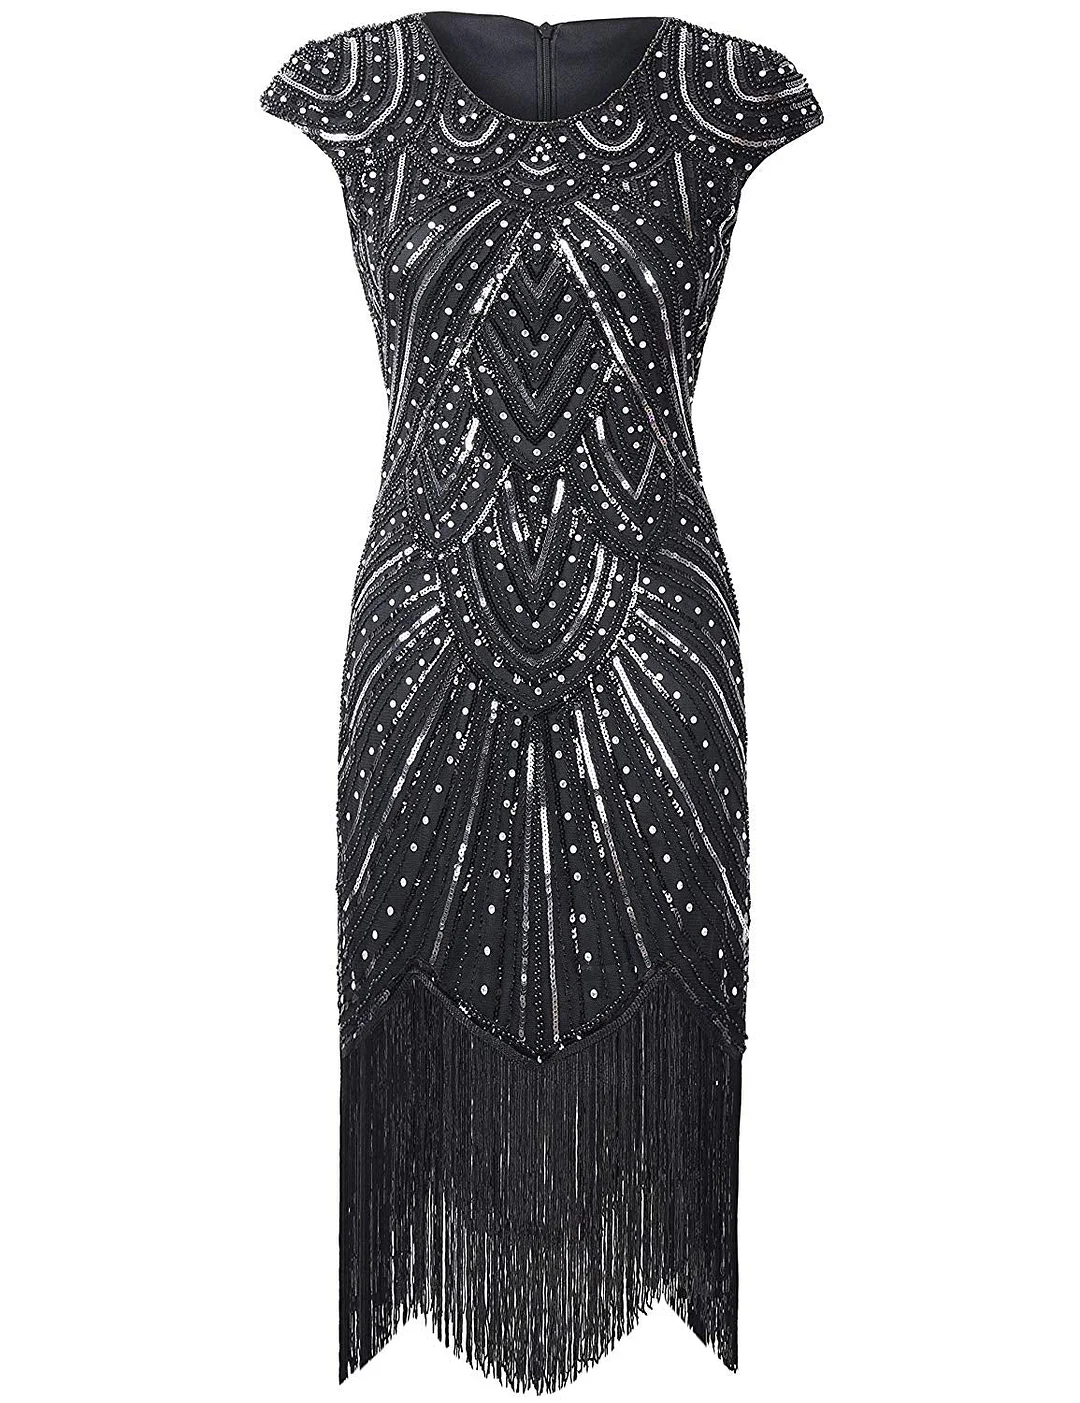 Women's 1920s Flapper Dress Crystal Sequin Embellished Fringed Gatsby Dress